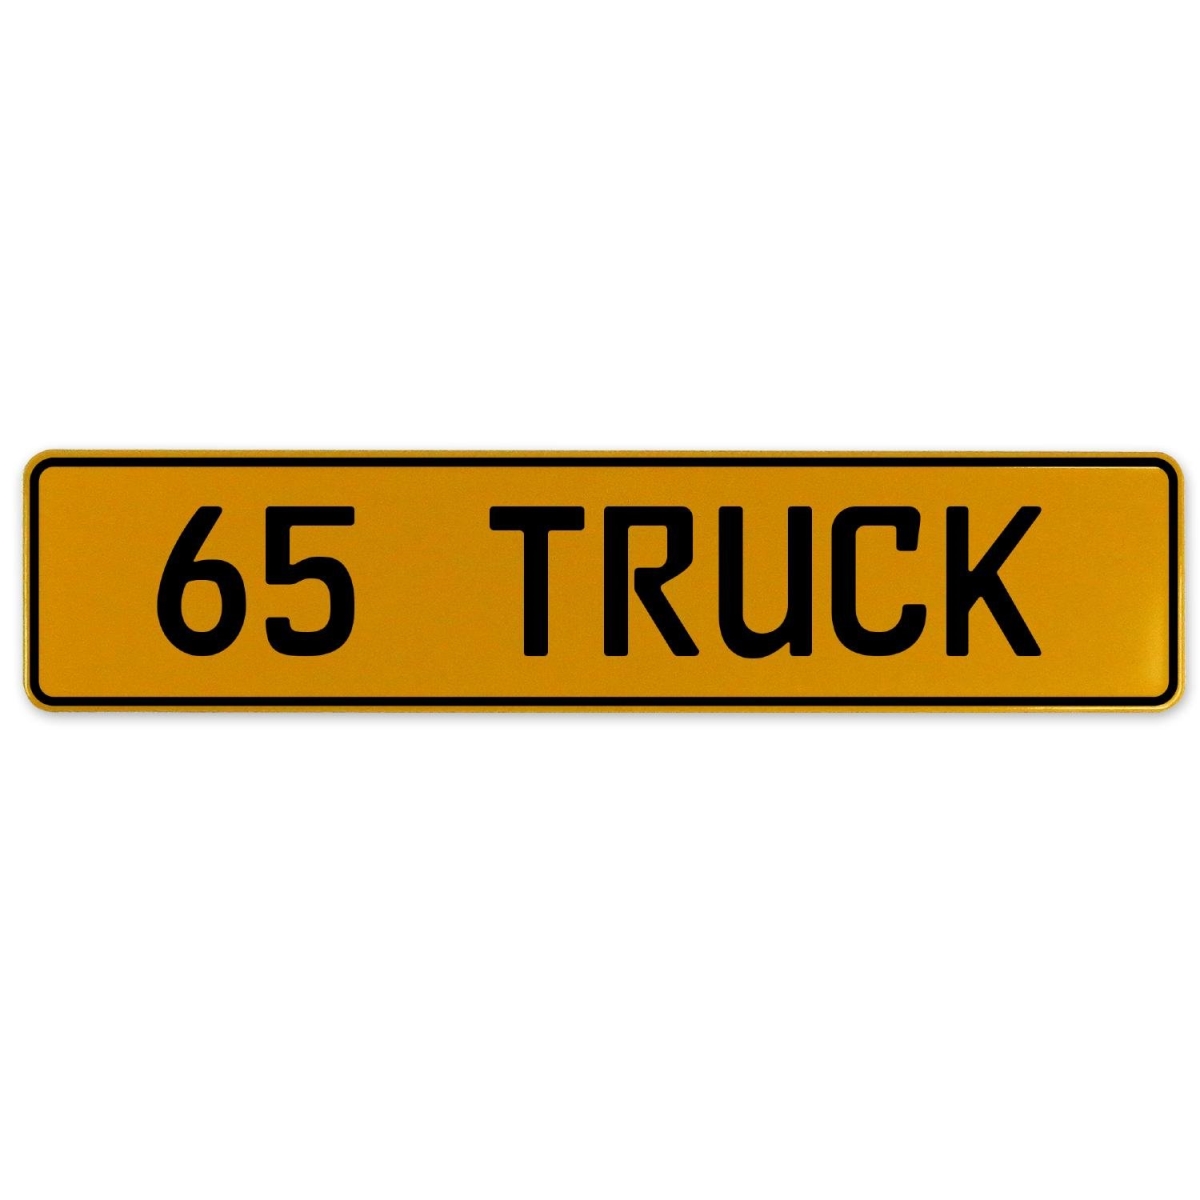 65 Truck - Yellow Aluminum Street Sign Mancave Euro Plate Name Door Sign Wall